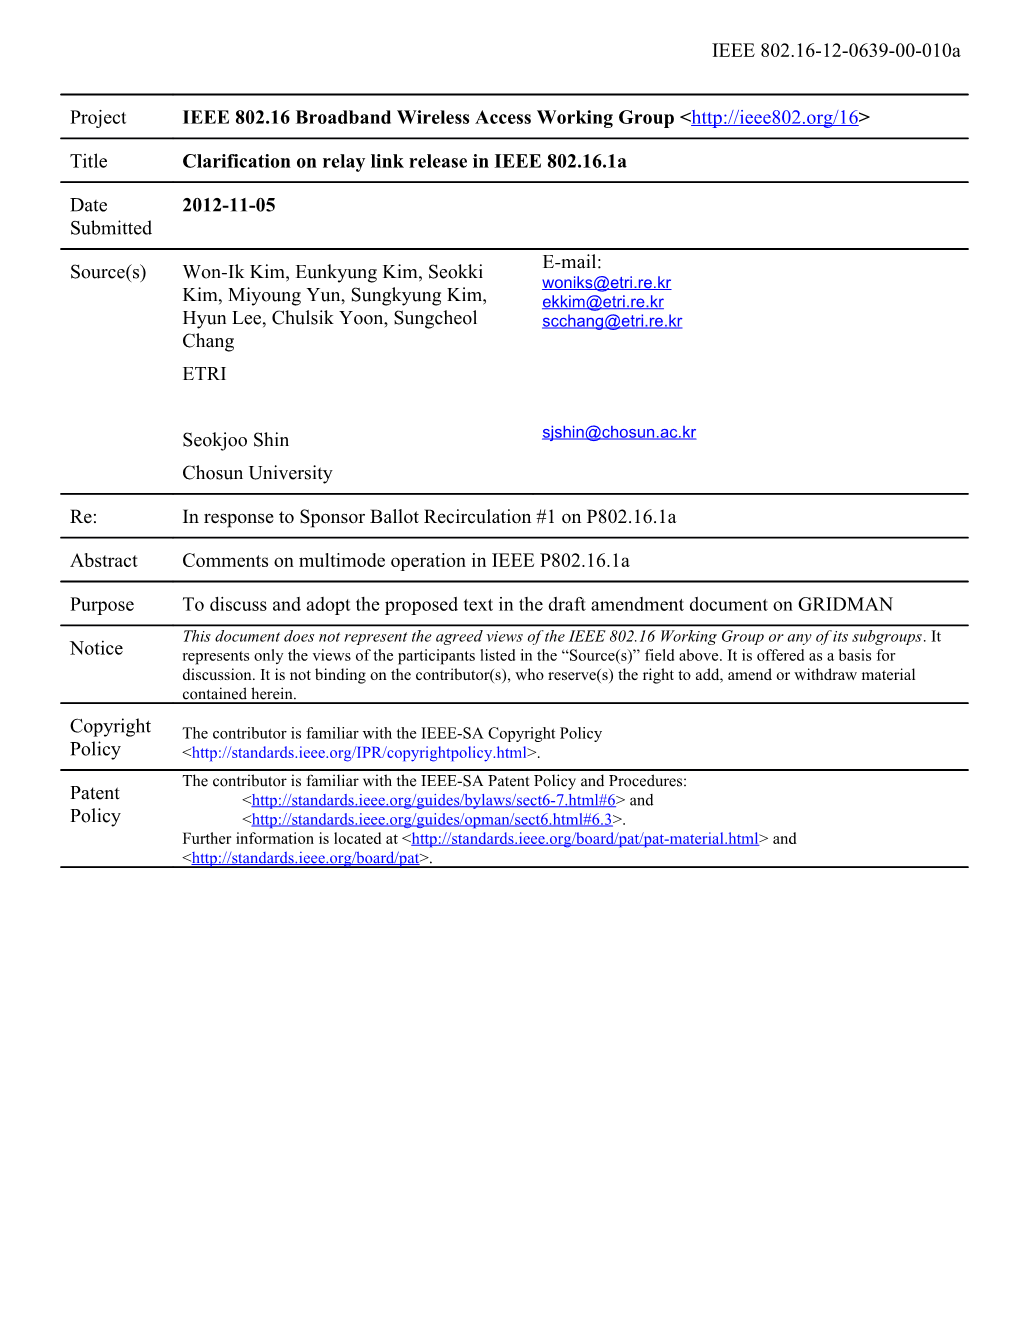 IEEE 802.16 Mentor Document Template s4